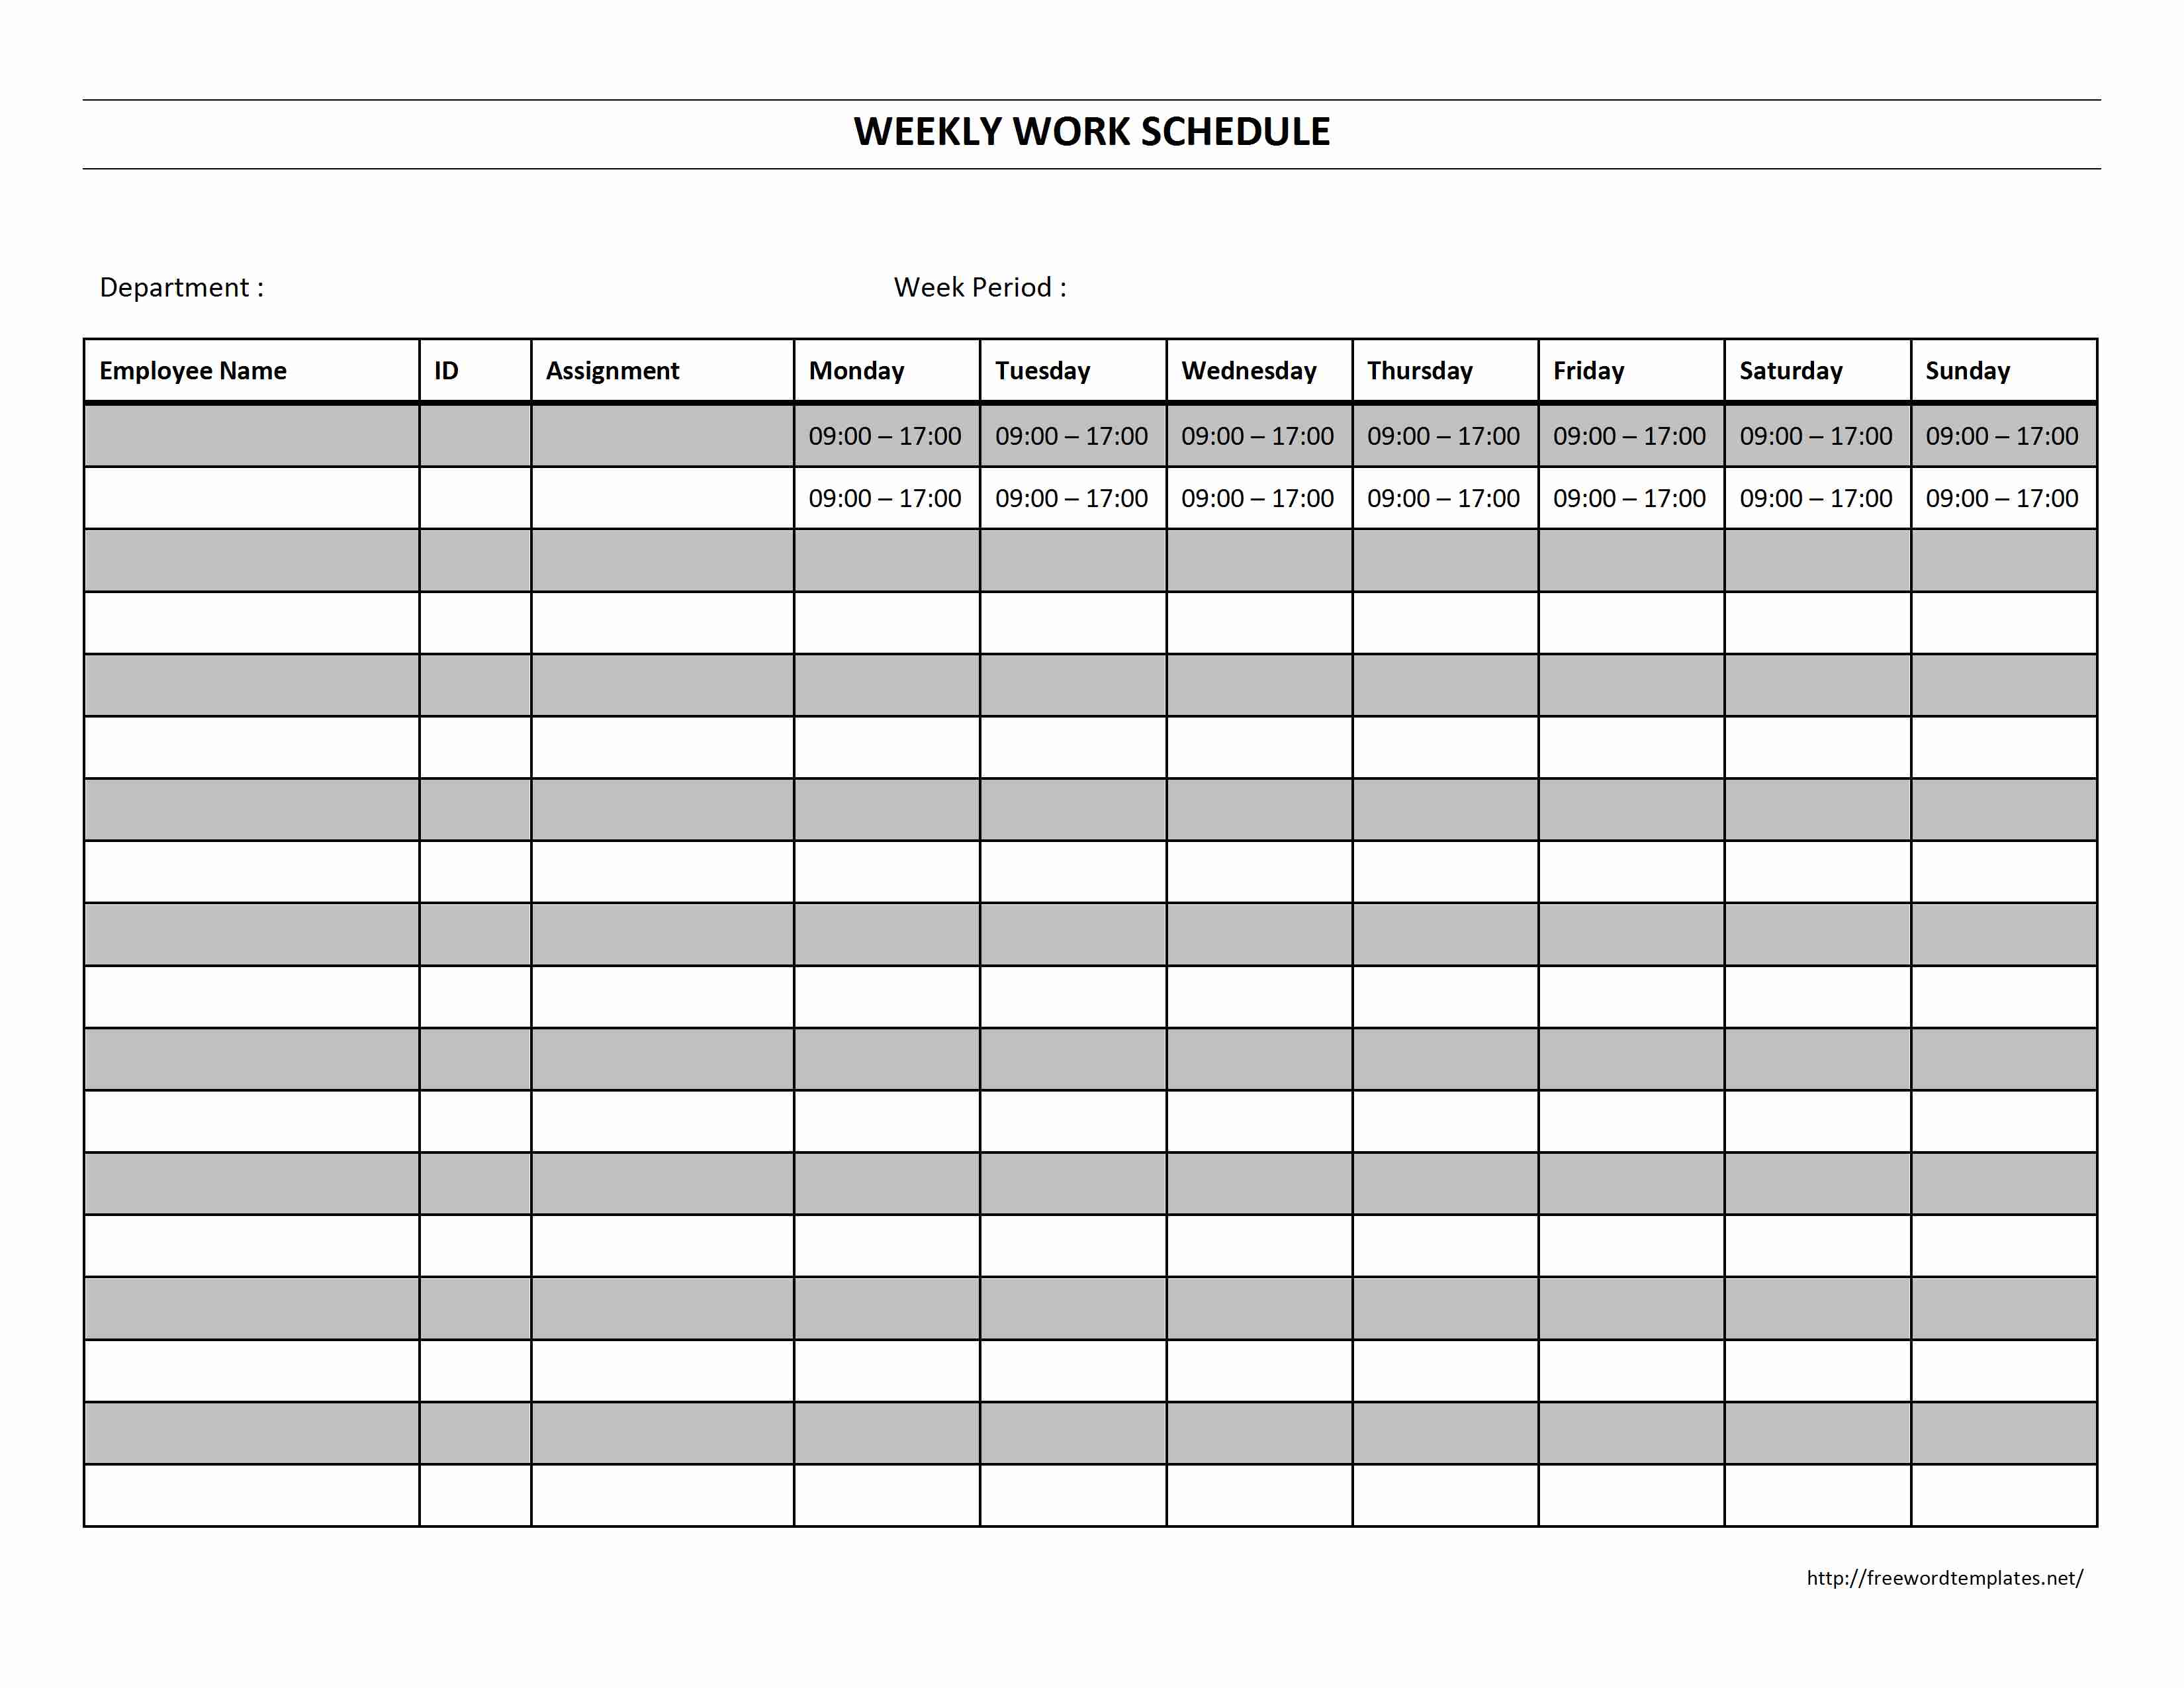 Weekly Work Schedule | Freewordtemplates.net